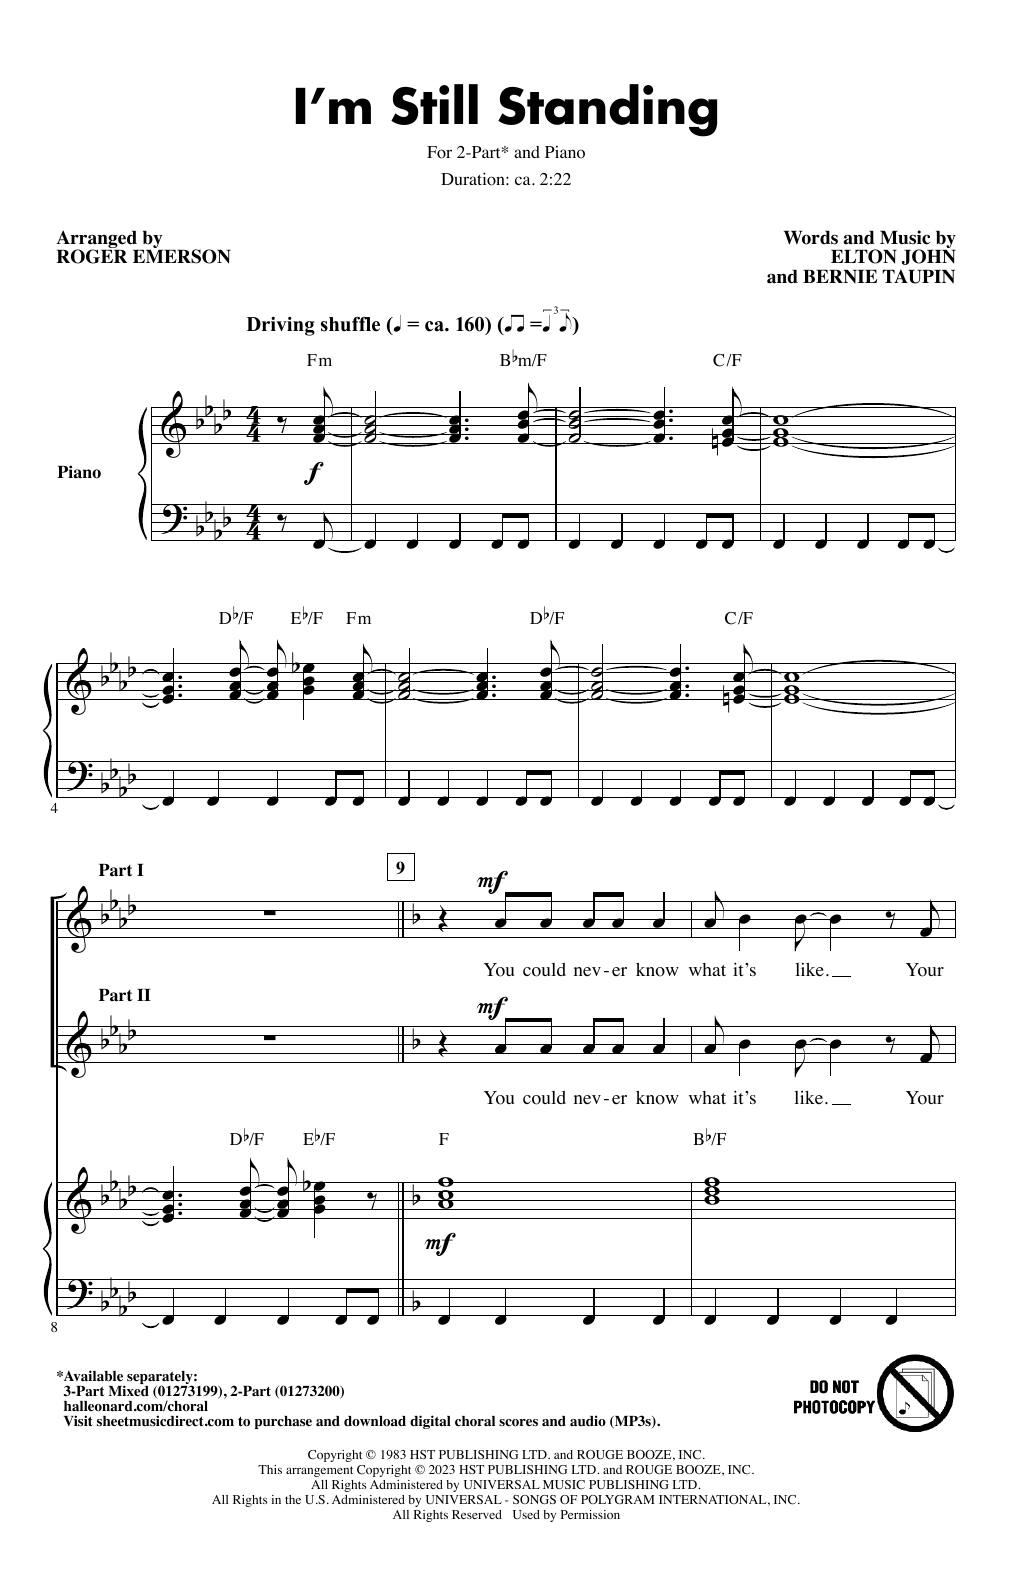 Elton John I'm Still Standing (arr. Roger Emerson) sheet music notes and chords arranged for 3-Part Mixed Choir